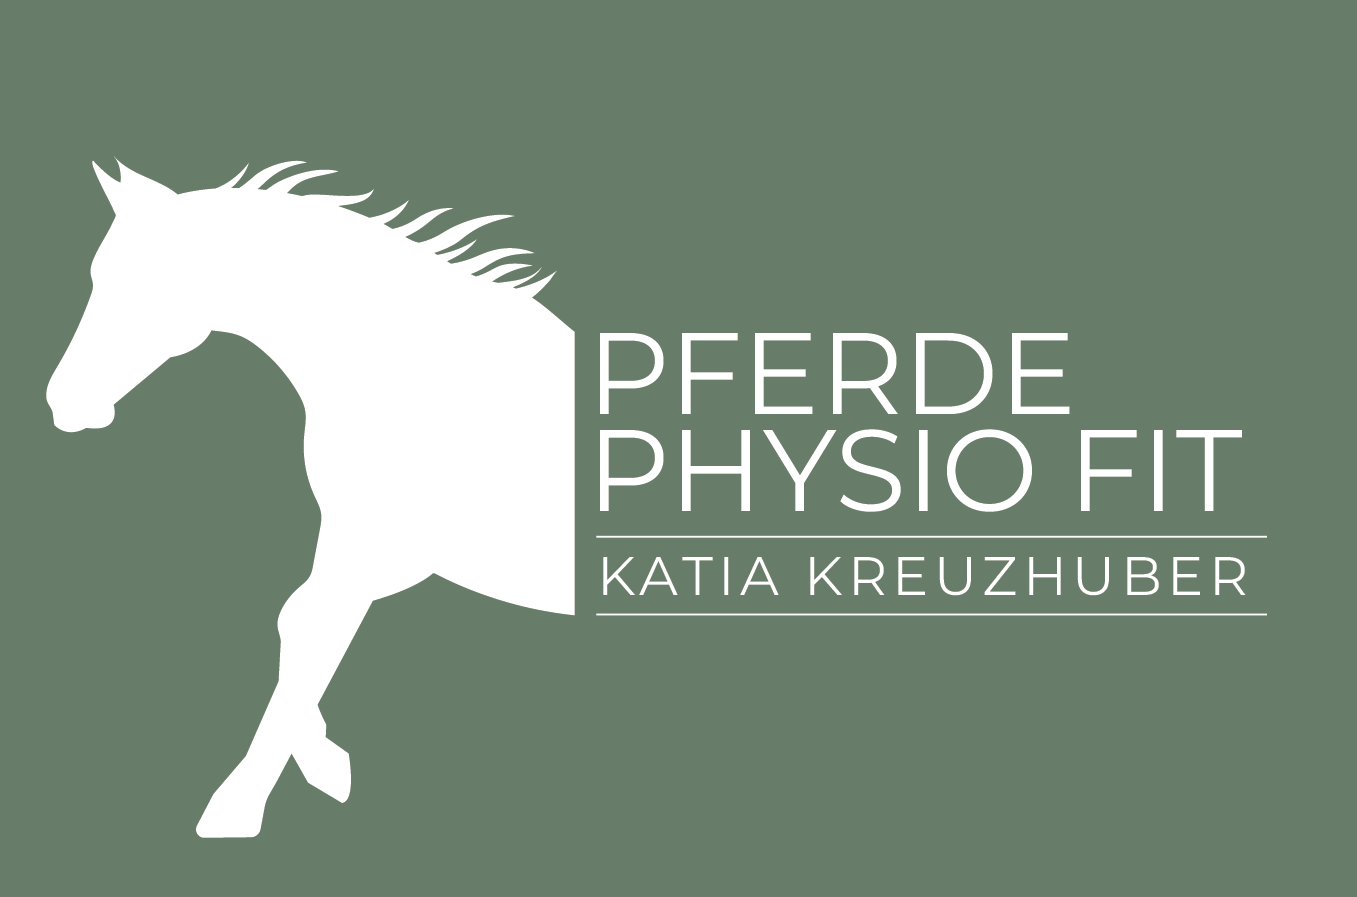 Pferde Physio Fit – Katia Kreuzhuber